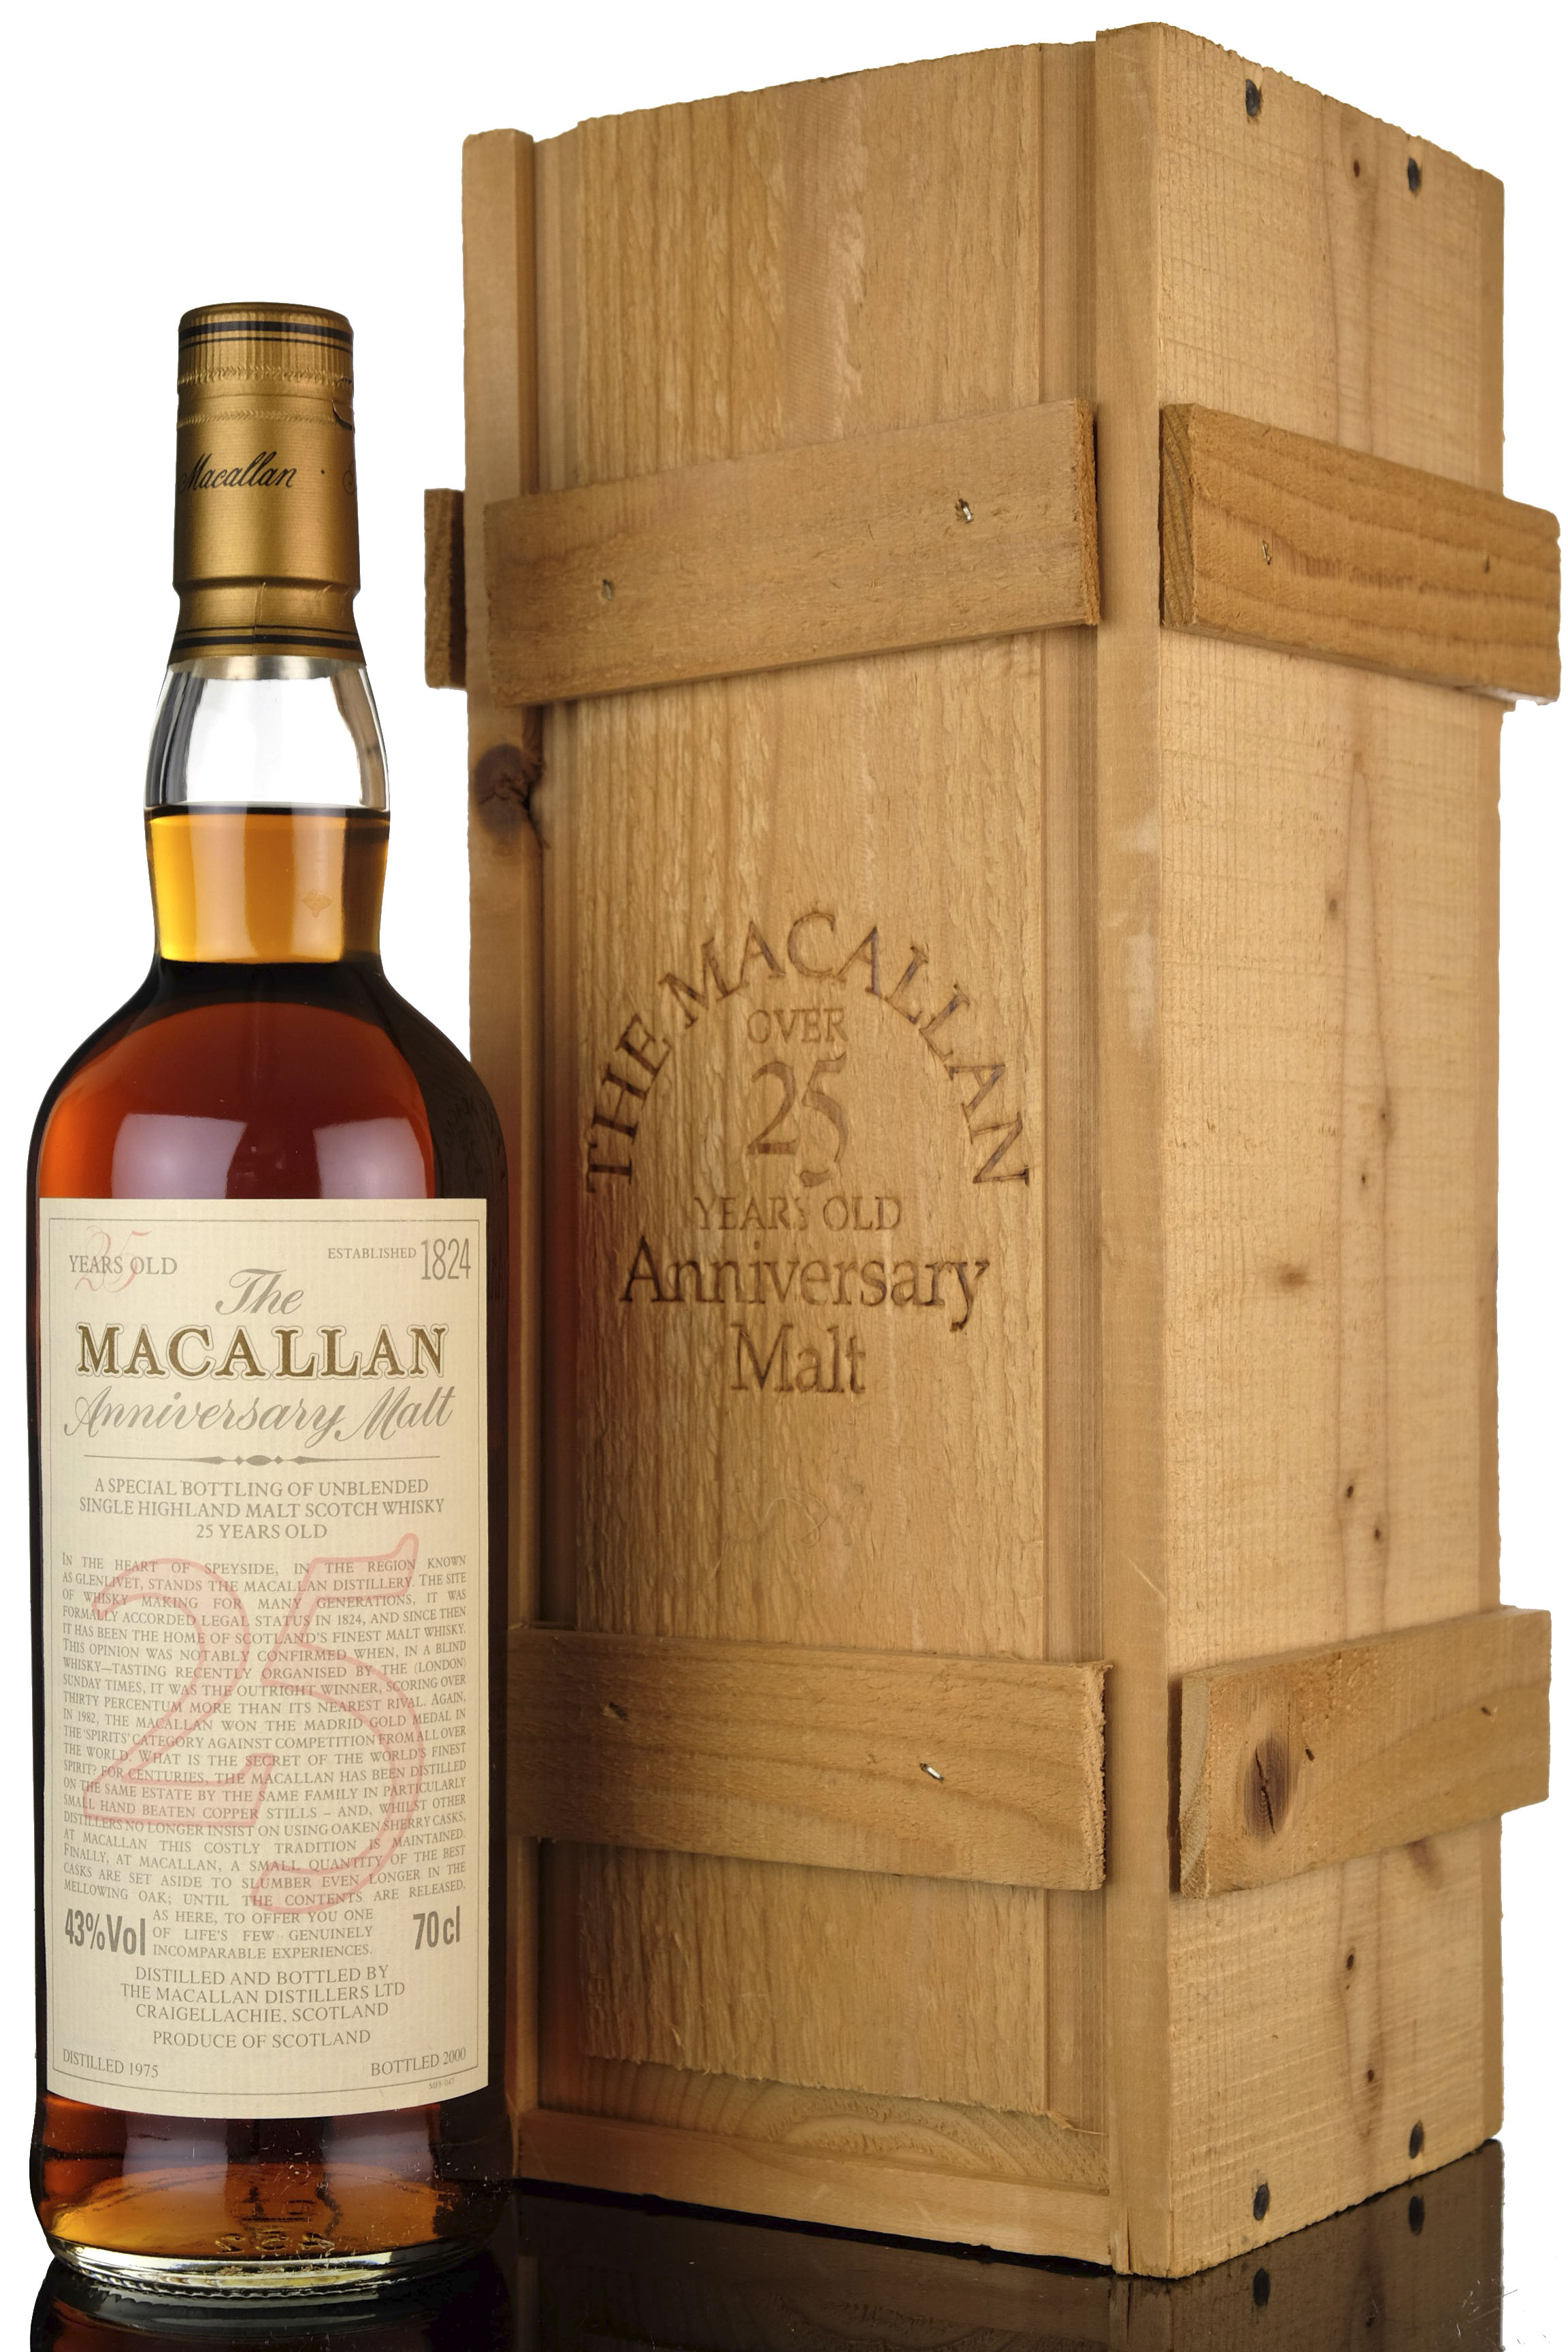 Macallan 1975-2000 - 25 Year Old Anniversary Malt